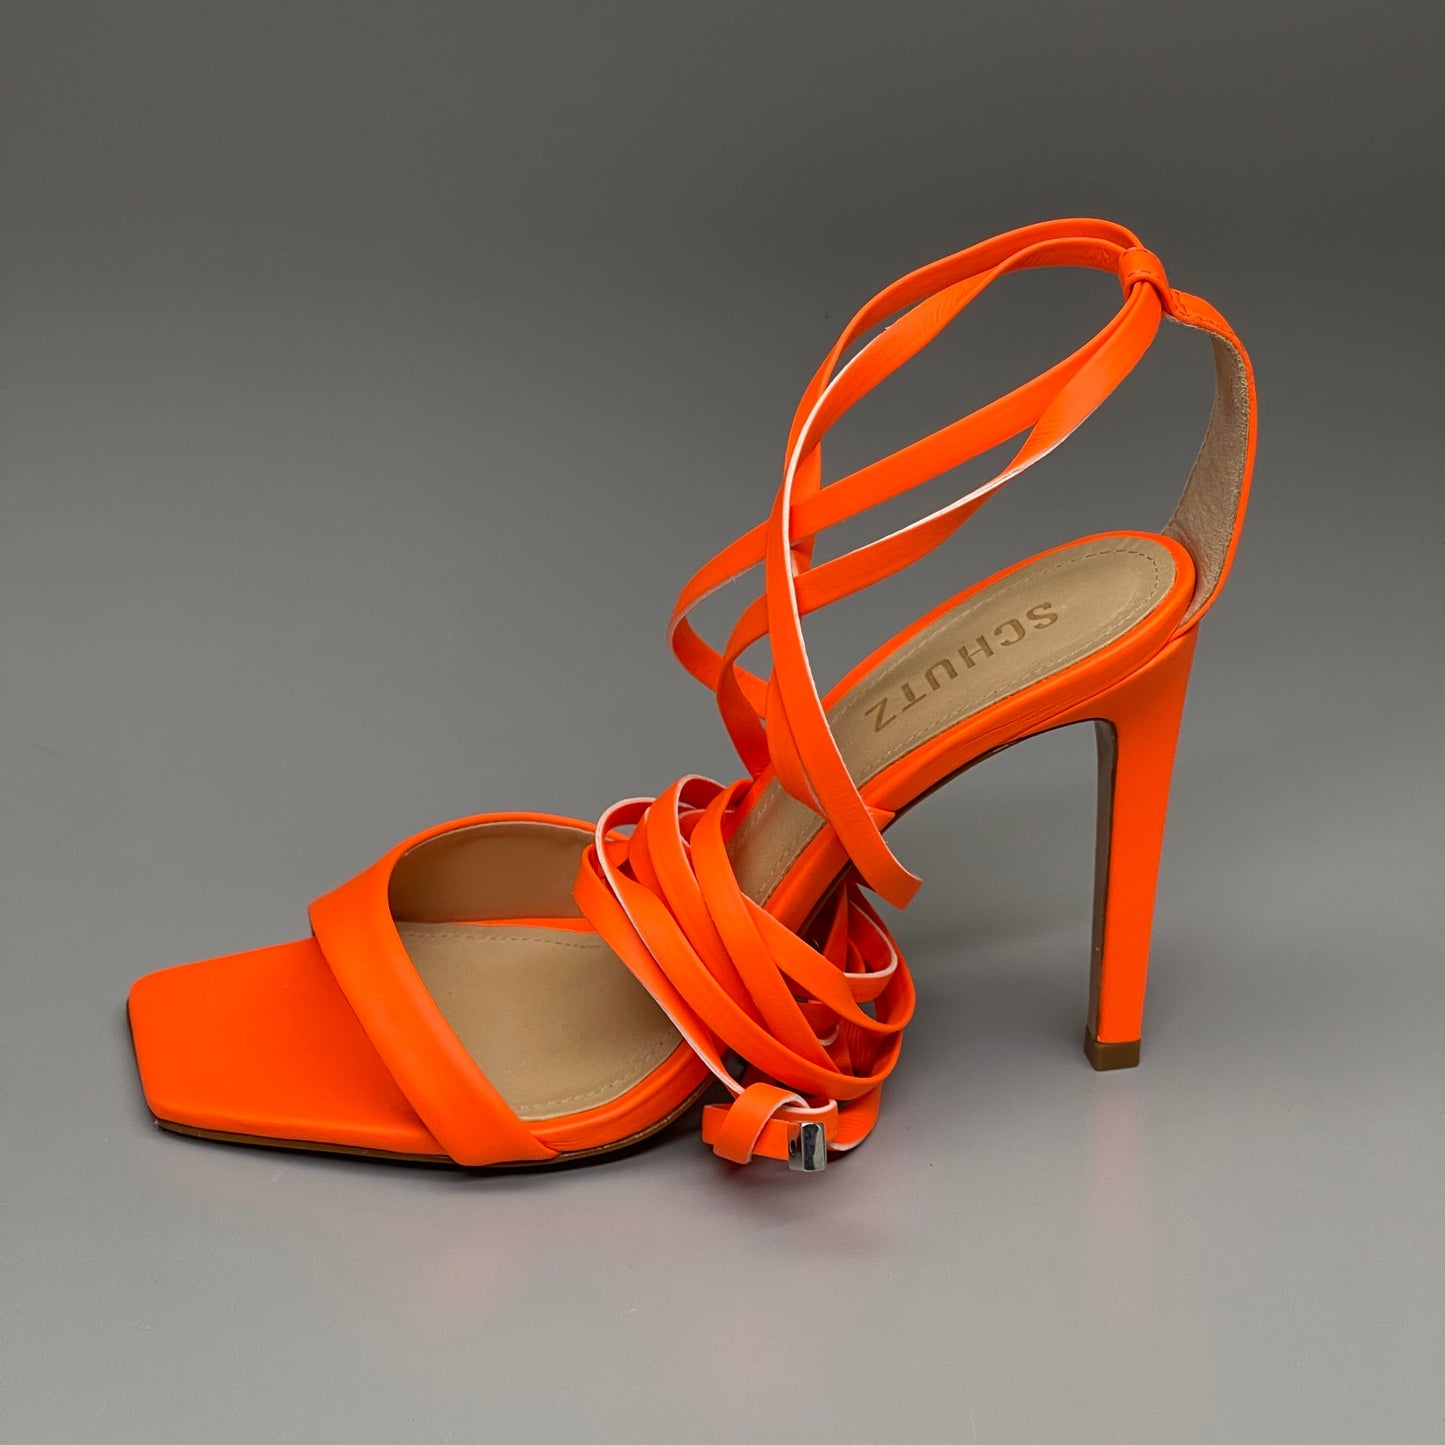 SCHUTZ Bryce Ankle Tie Women's High Heel Leather Strappy Sandal Acid Orange Sz 6.5 (New)